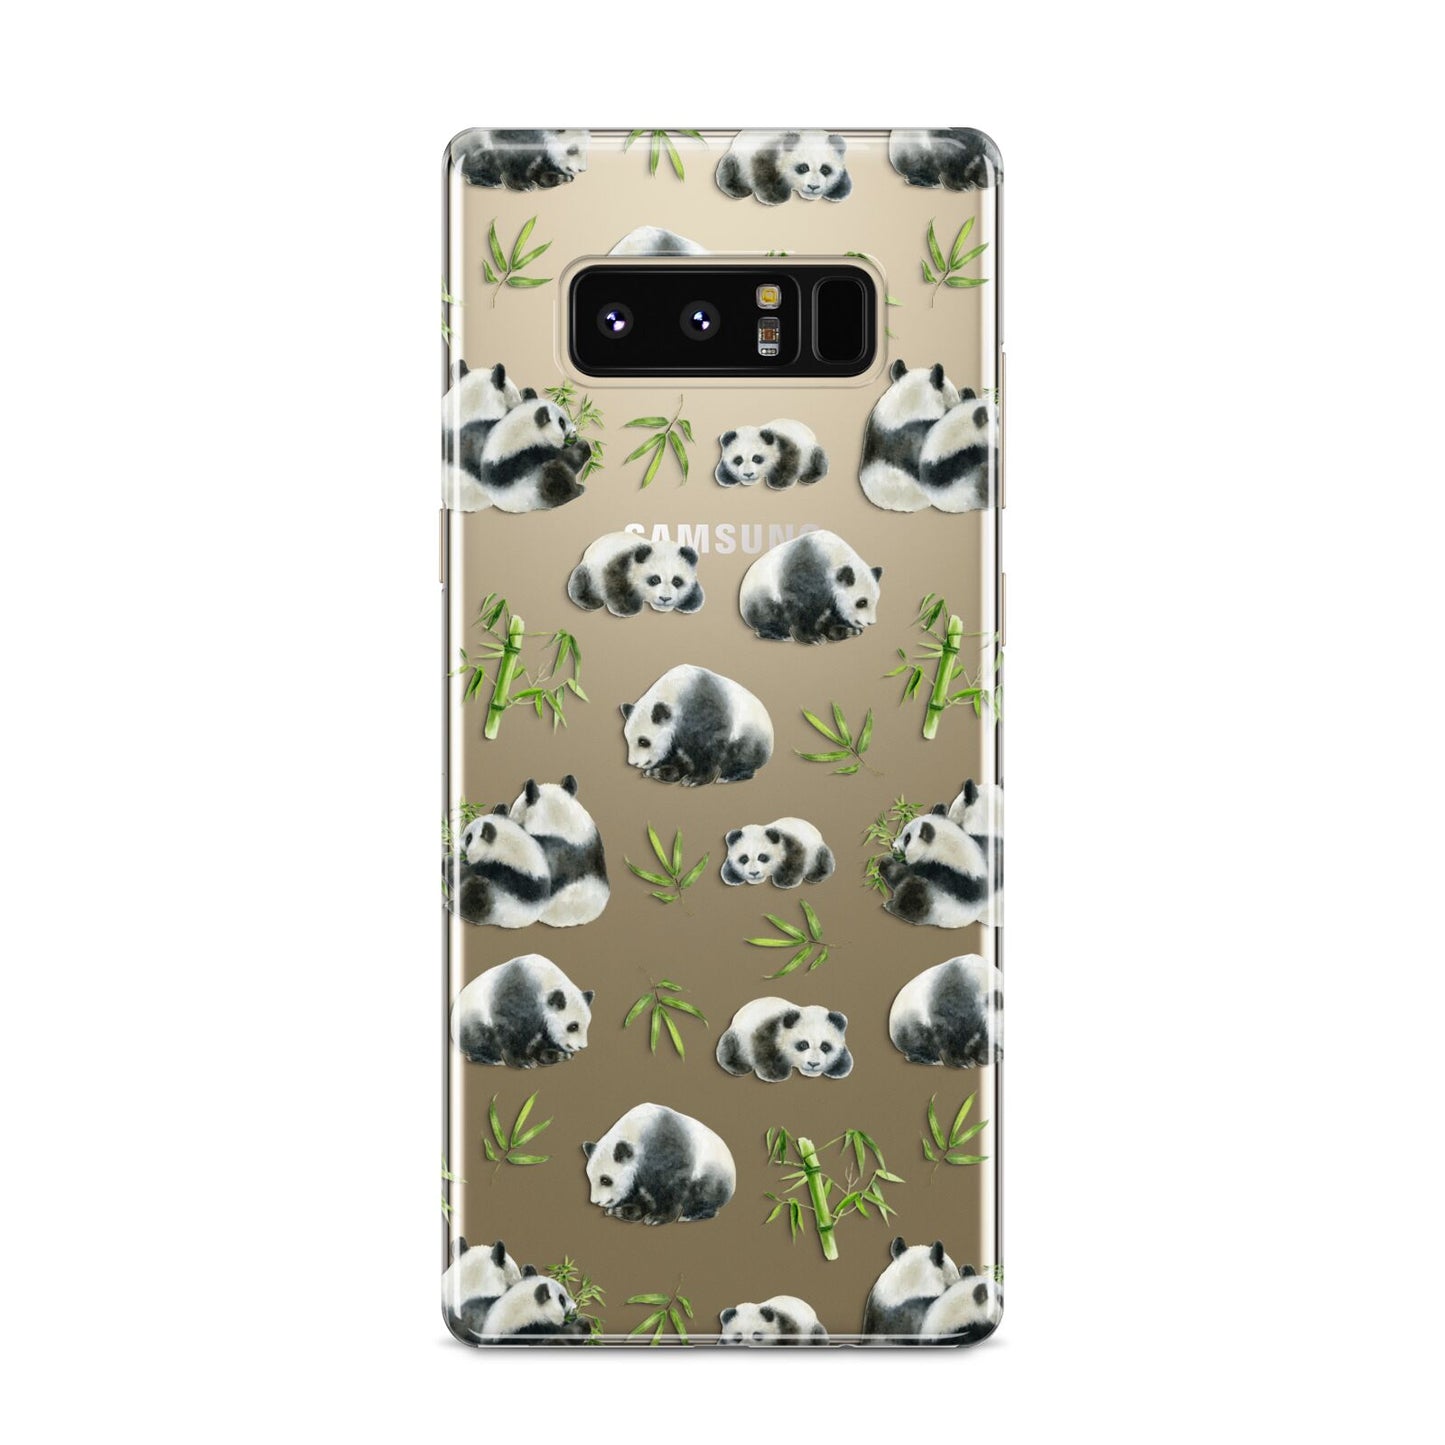 Panda Samsung Galaxy S8 Case